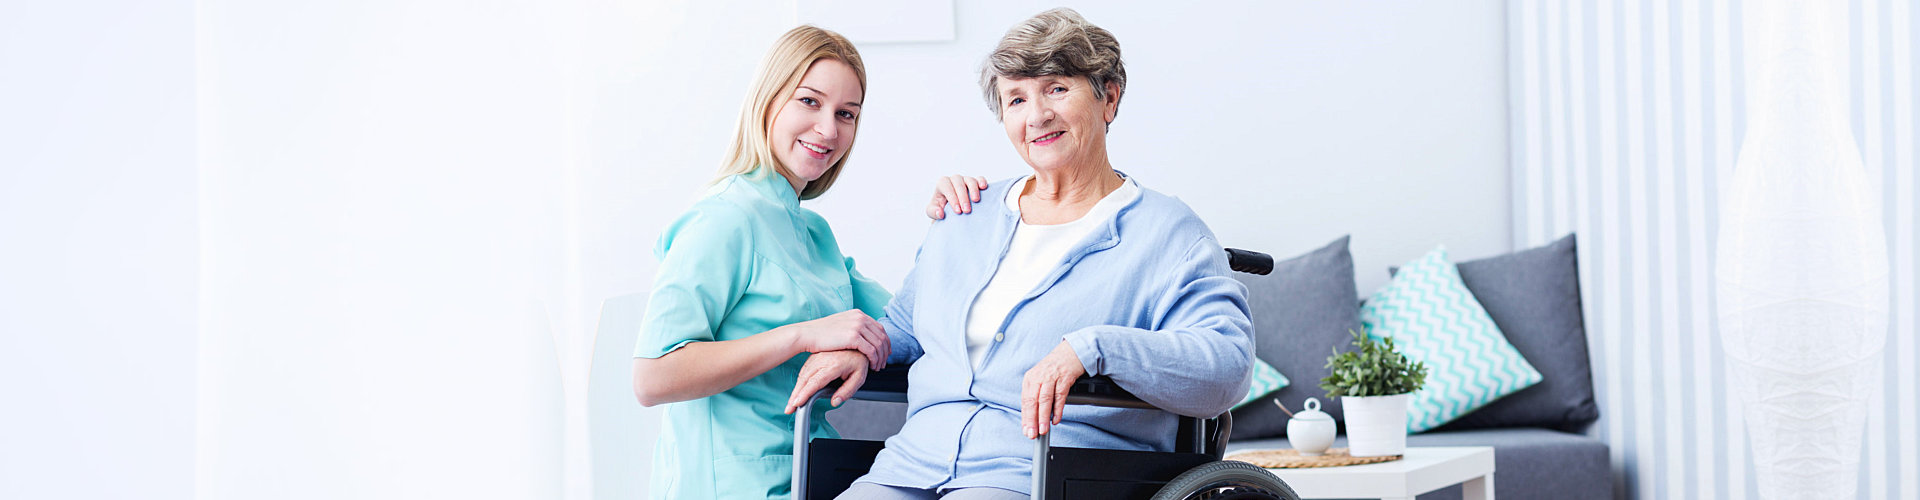 portrait of a caregiver woman and a female patient